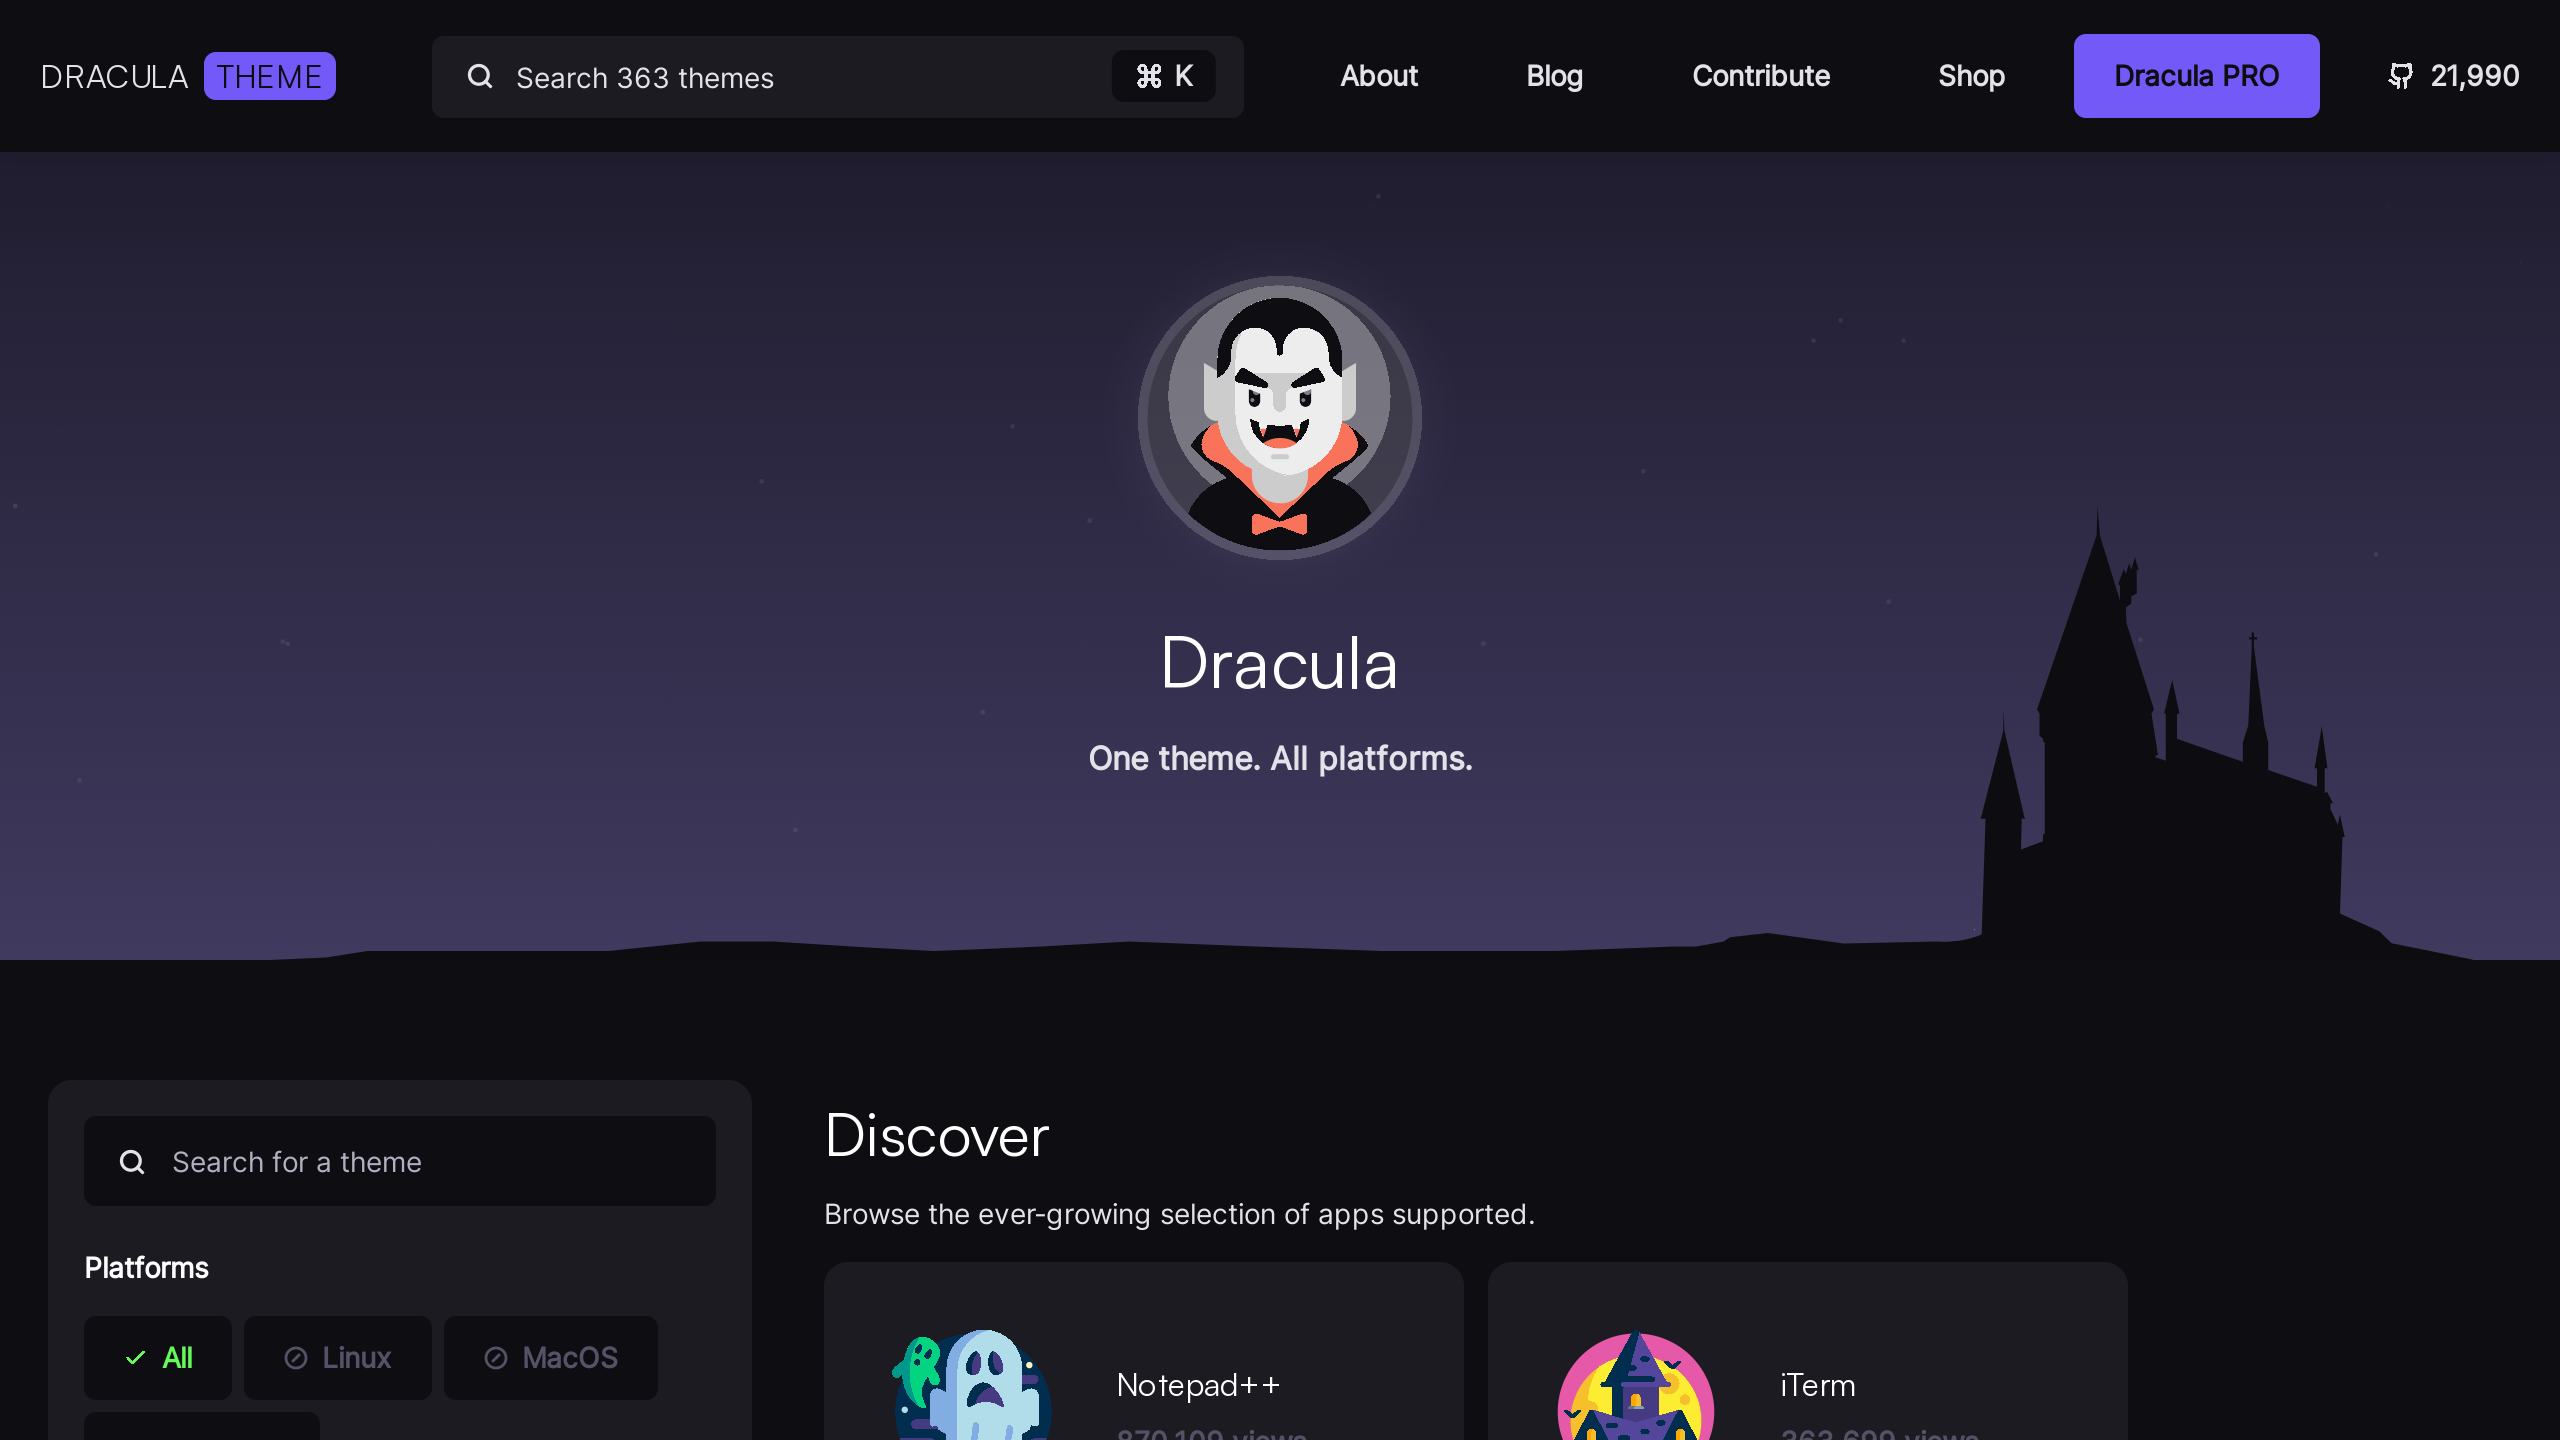 Dracula theme's website screenshot